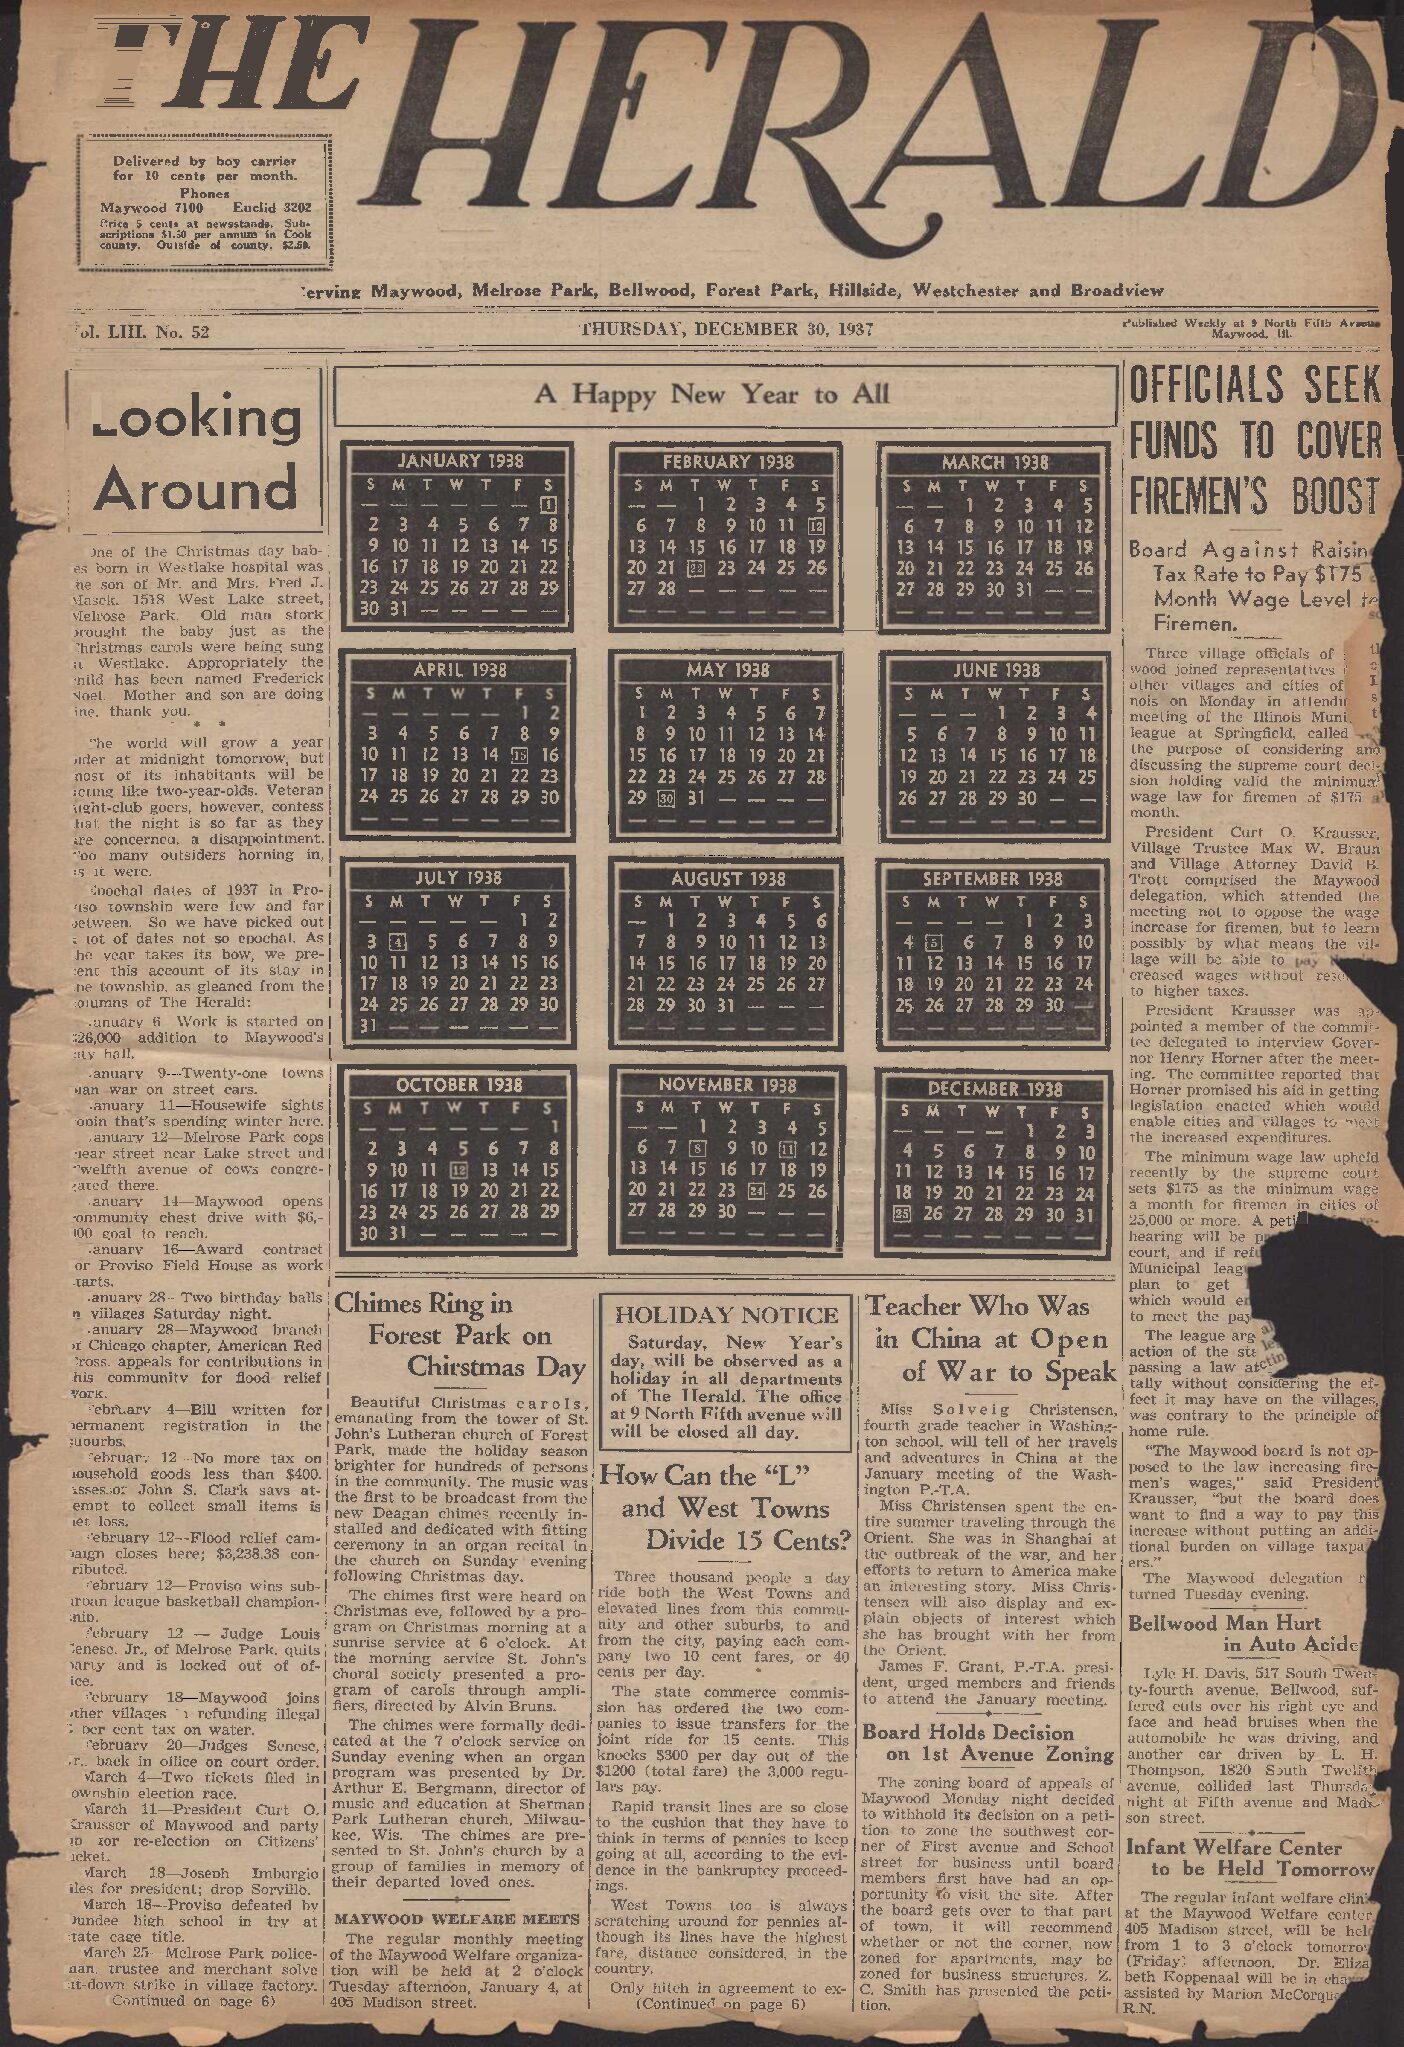 The Herald – 19371230